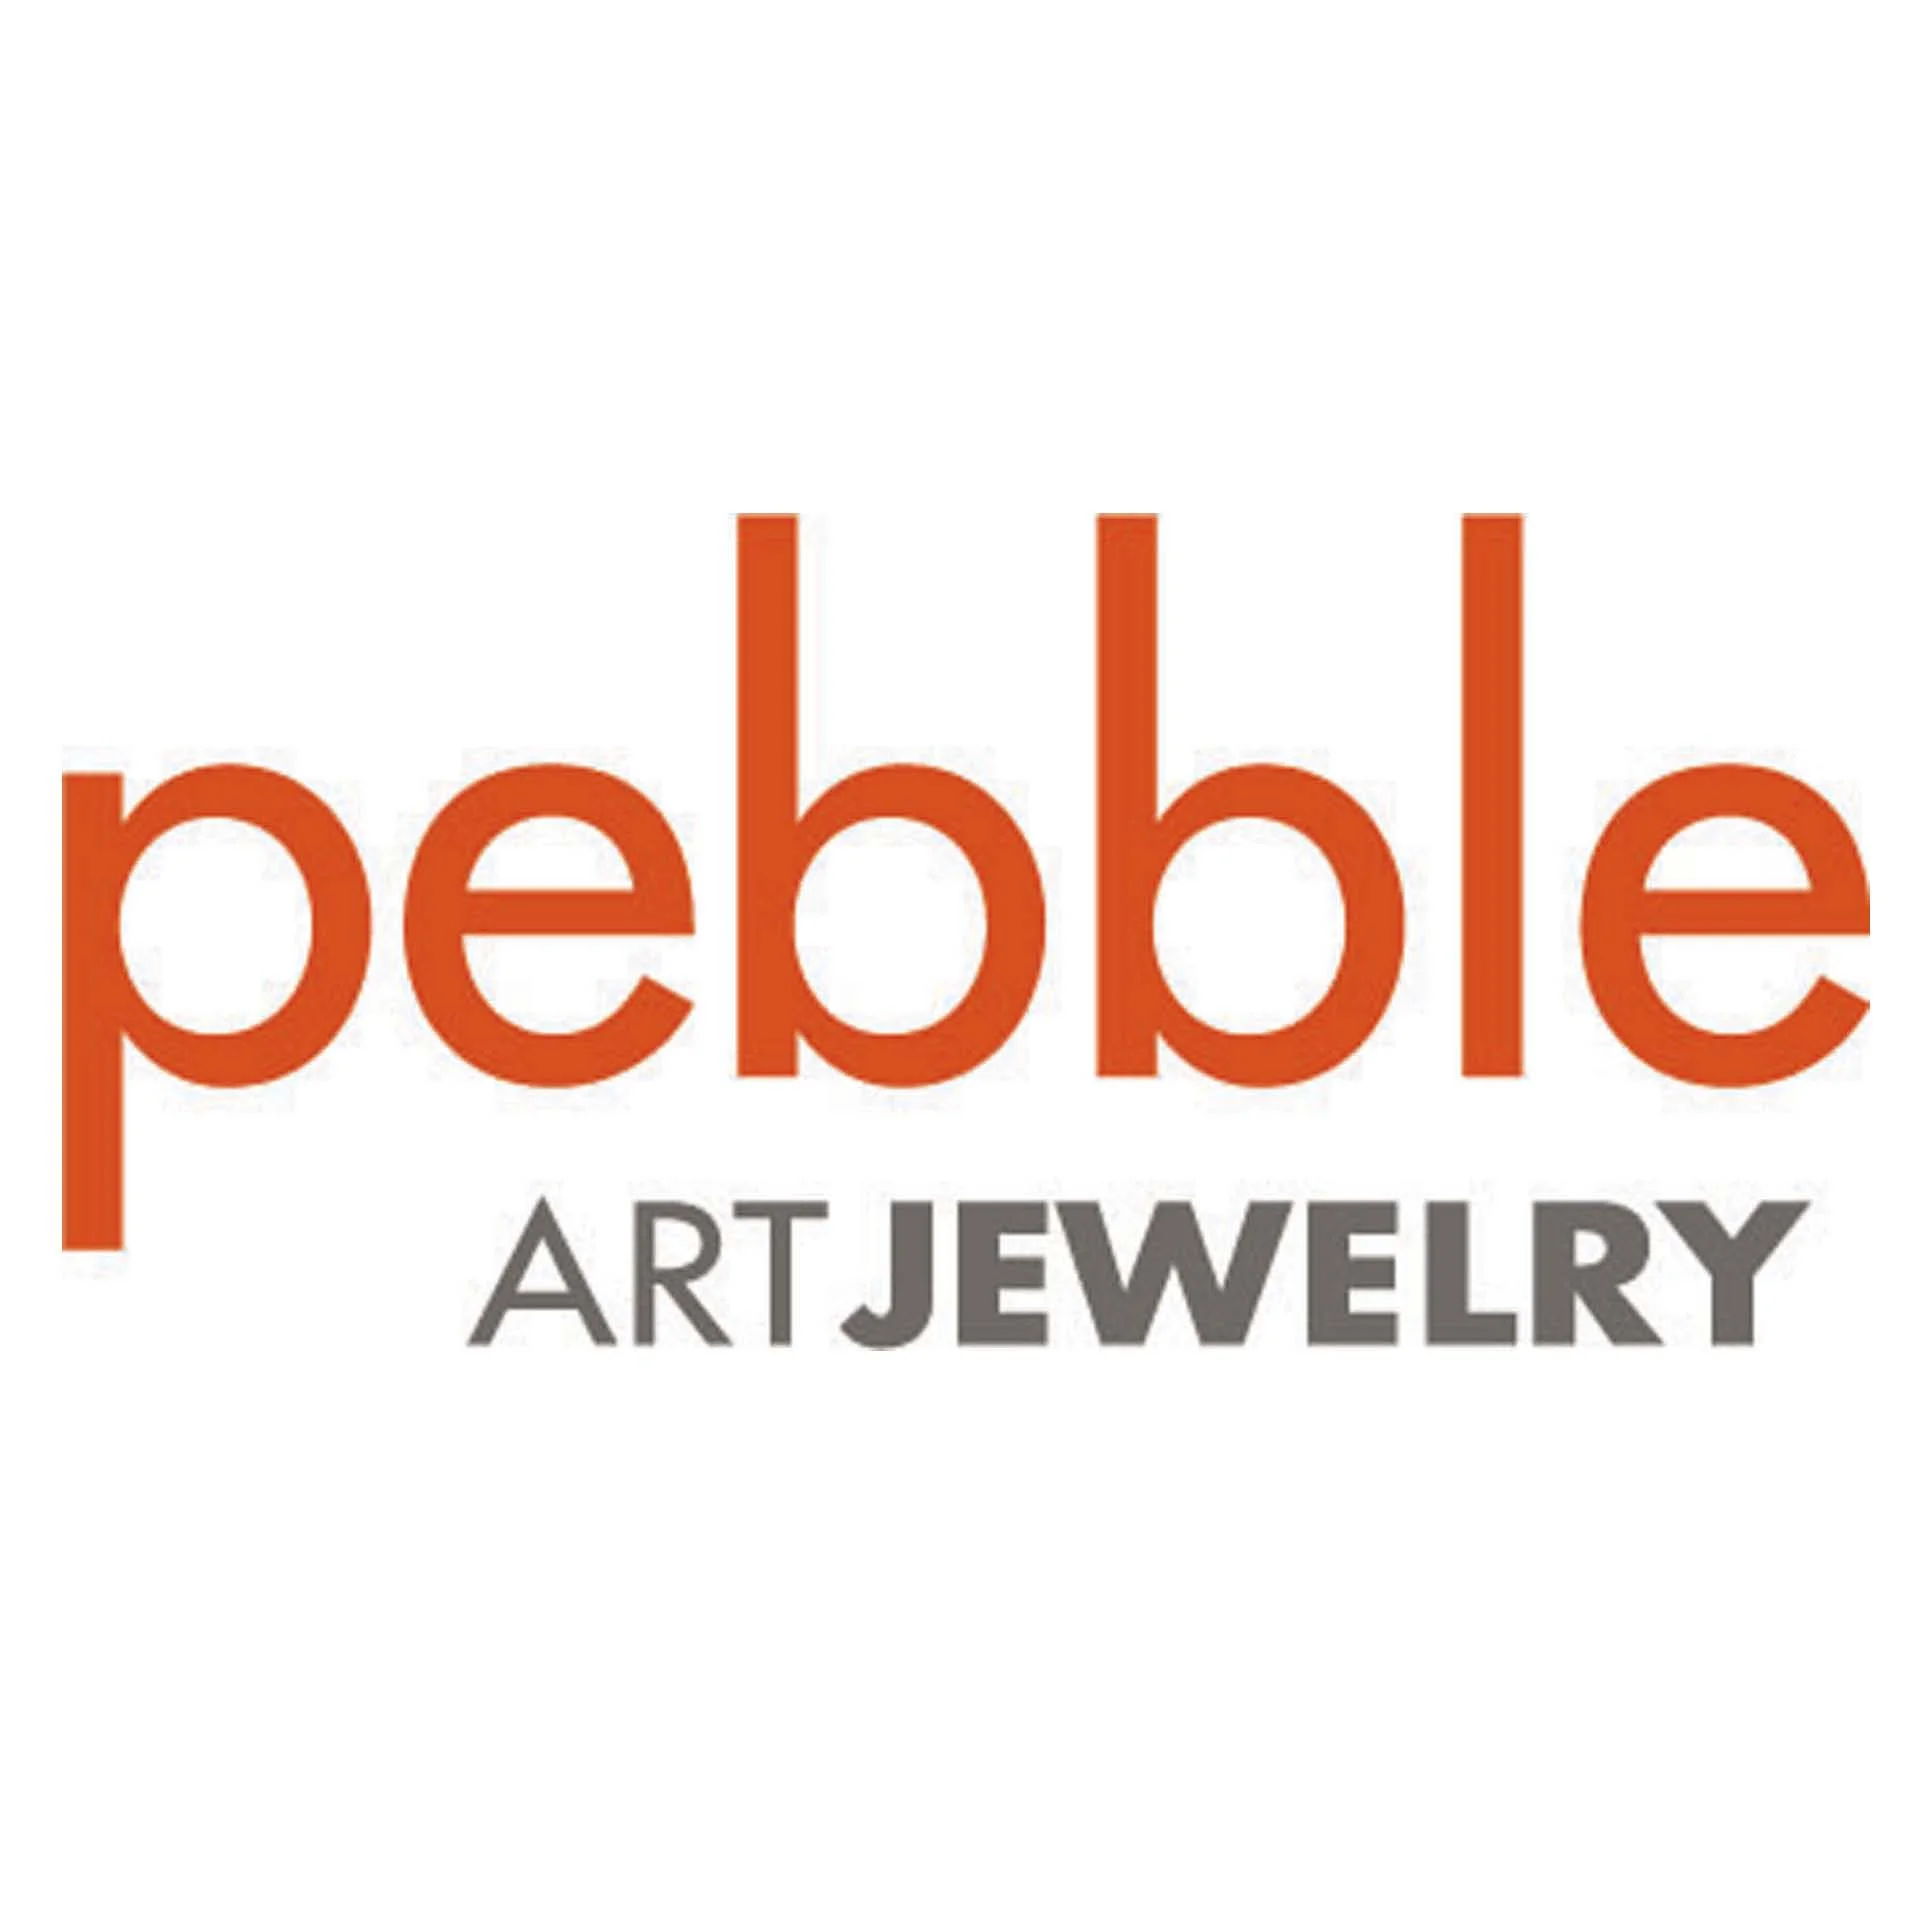 pebbleartjewelry